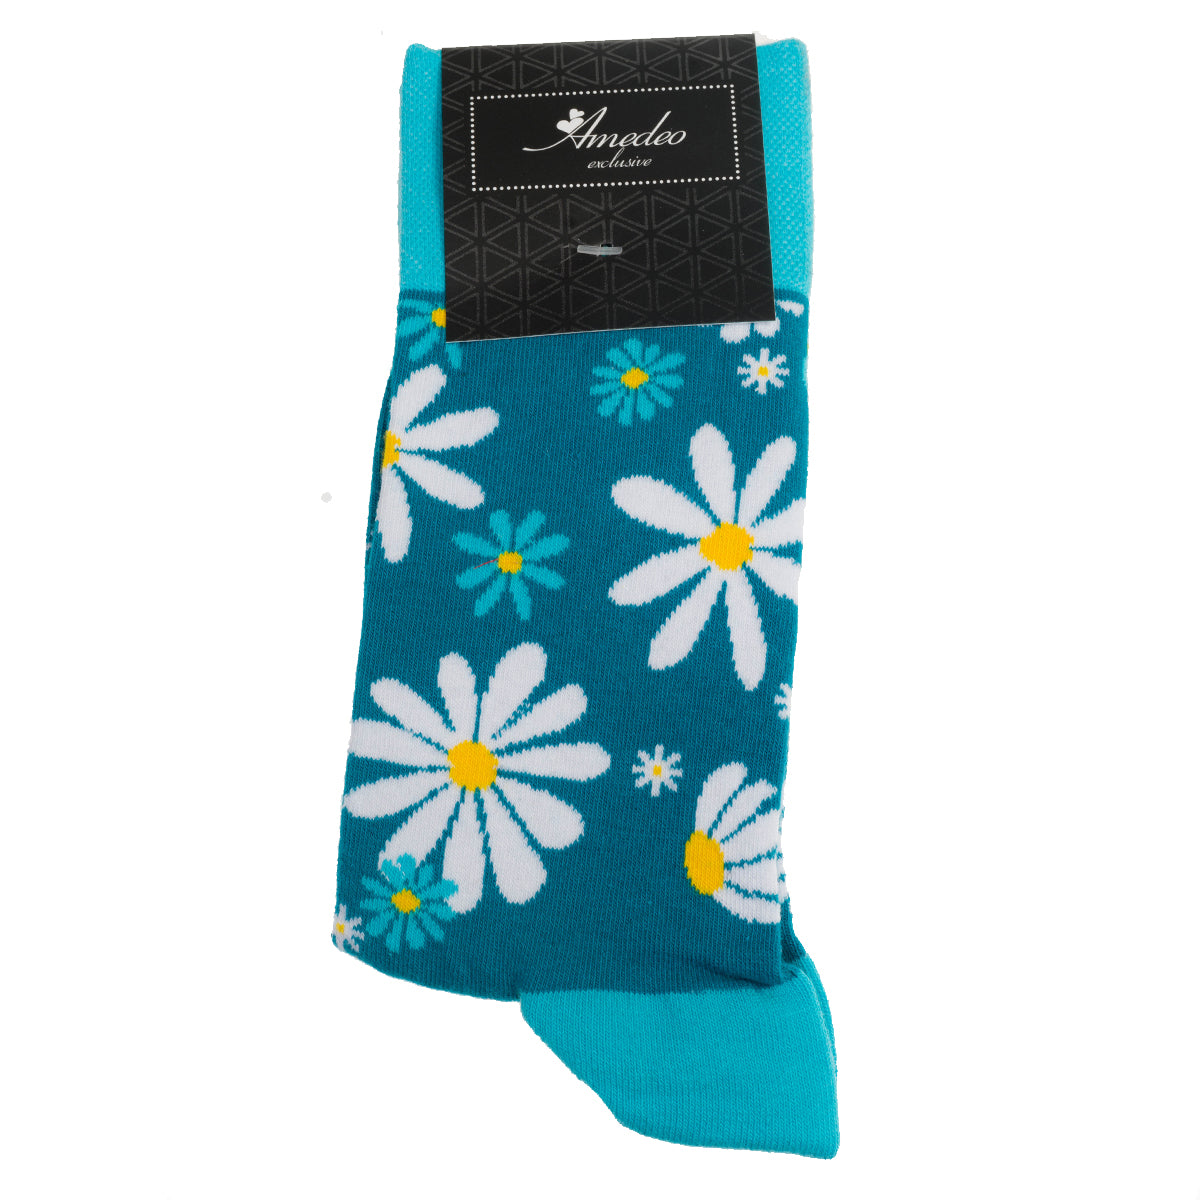 Blue With White Flowers-European Made - Egyptian Cotton Socks - Premium Cotton Fun socks with Soft Elastic